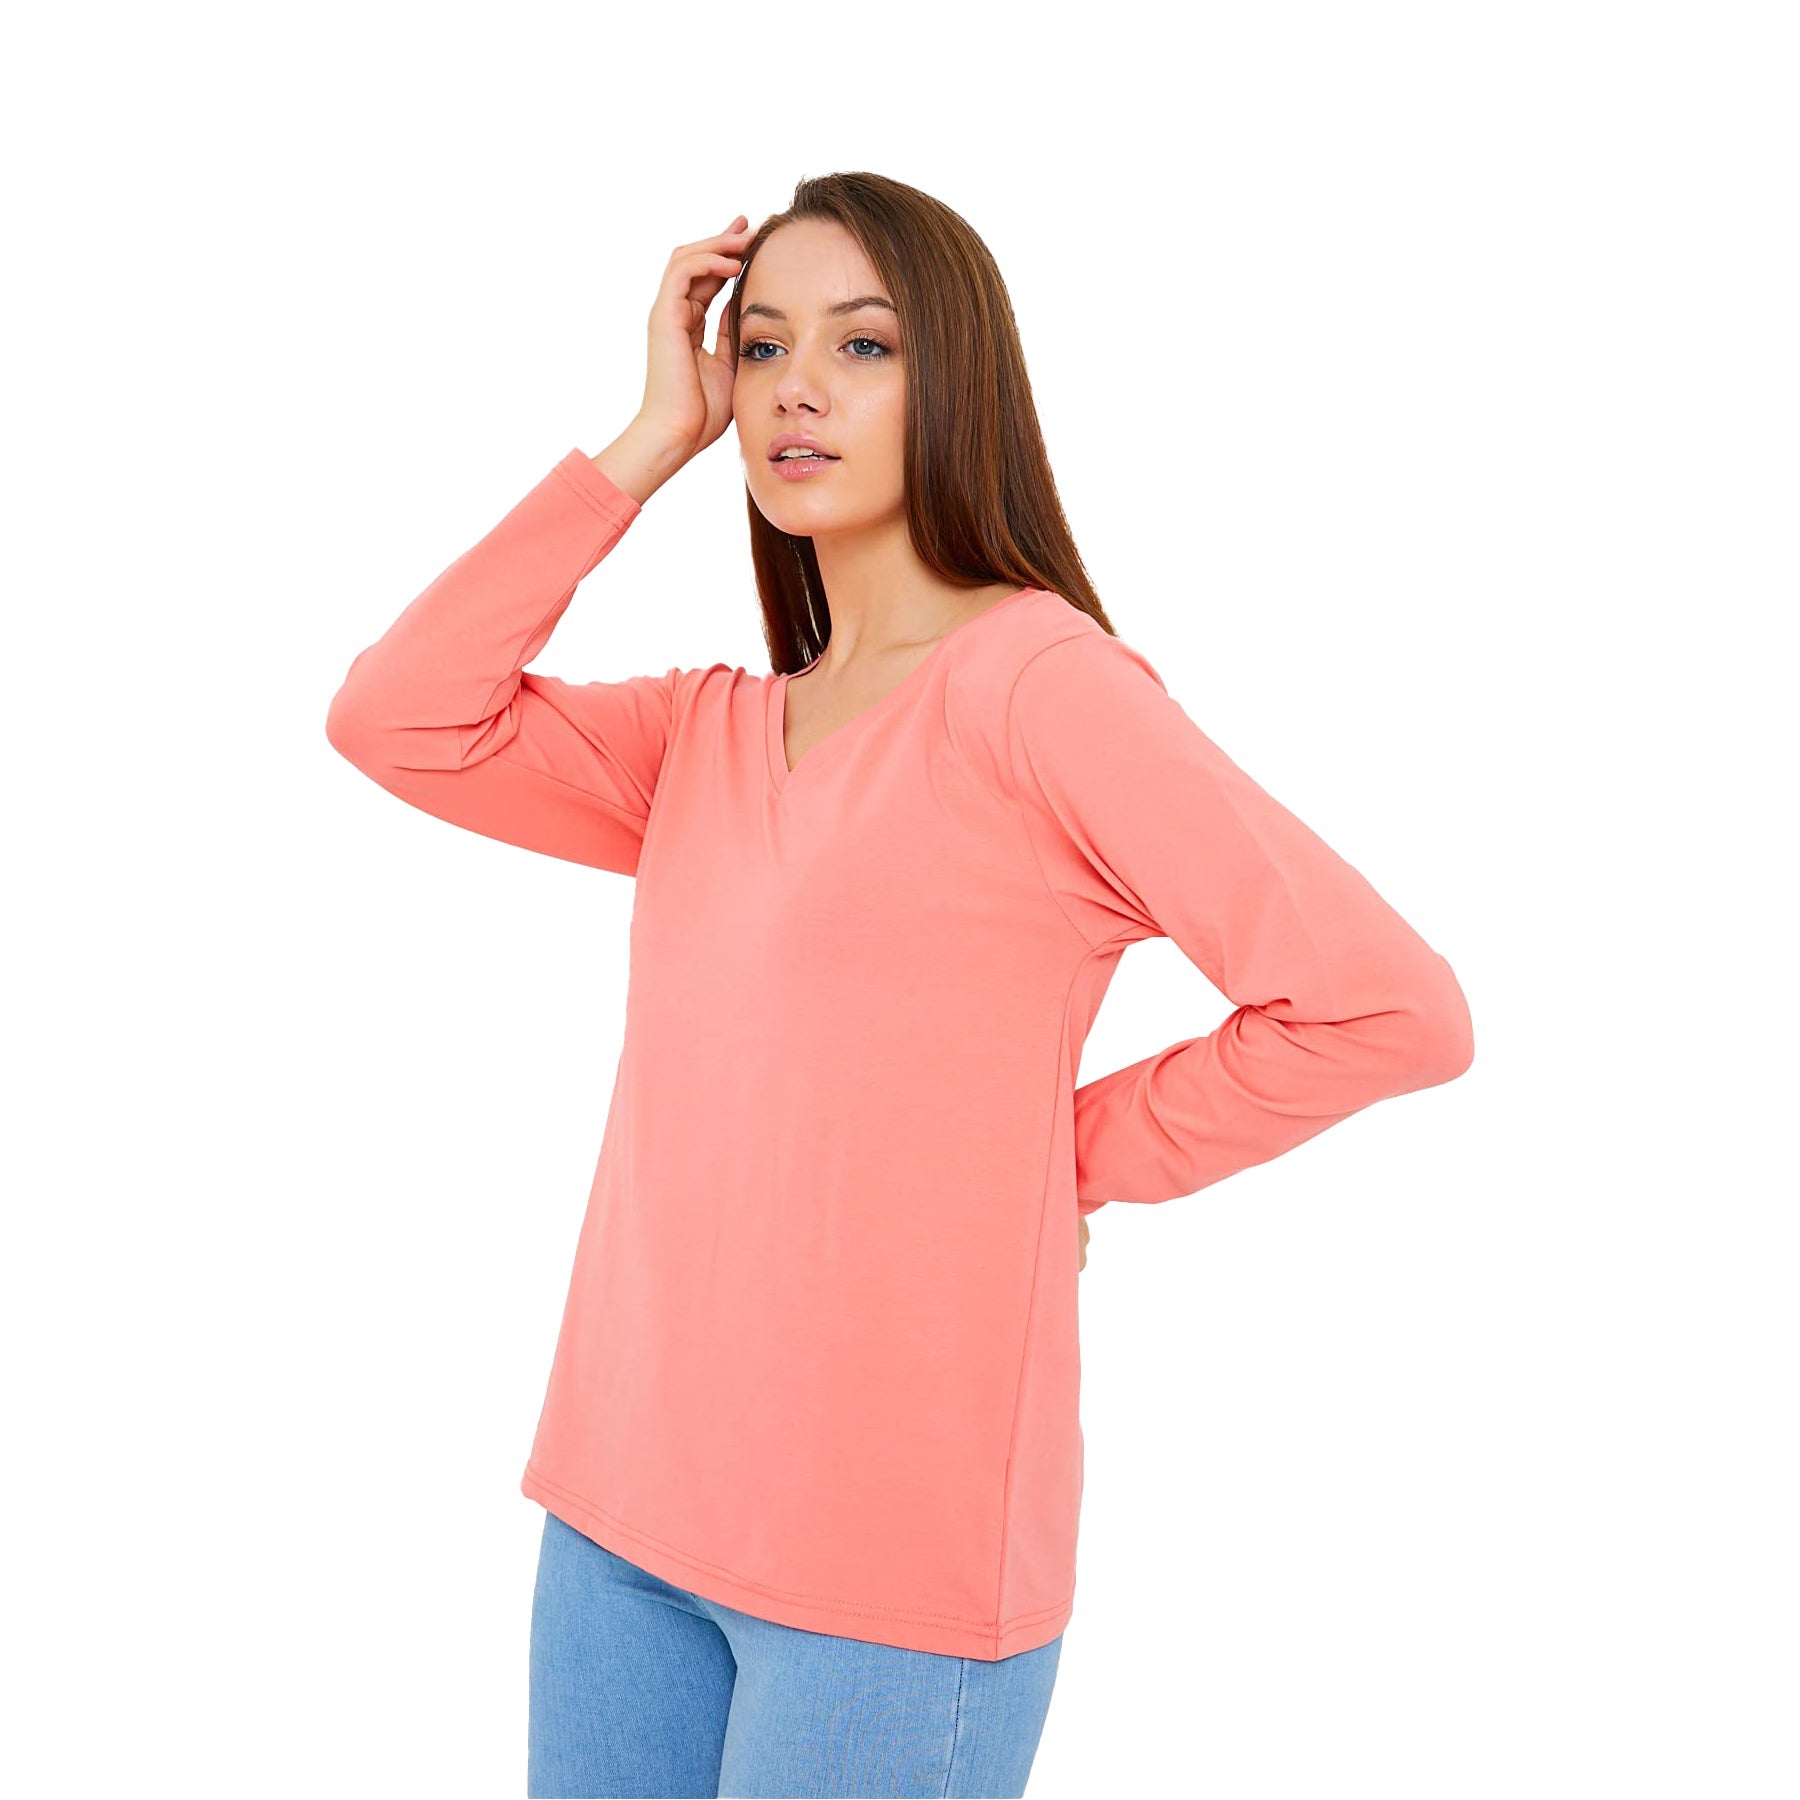 Long Sleeve V-Neck Shirts for Women & Girls - Colorful Pima Cotton-97